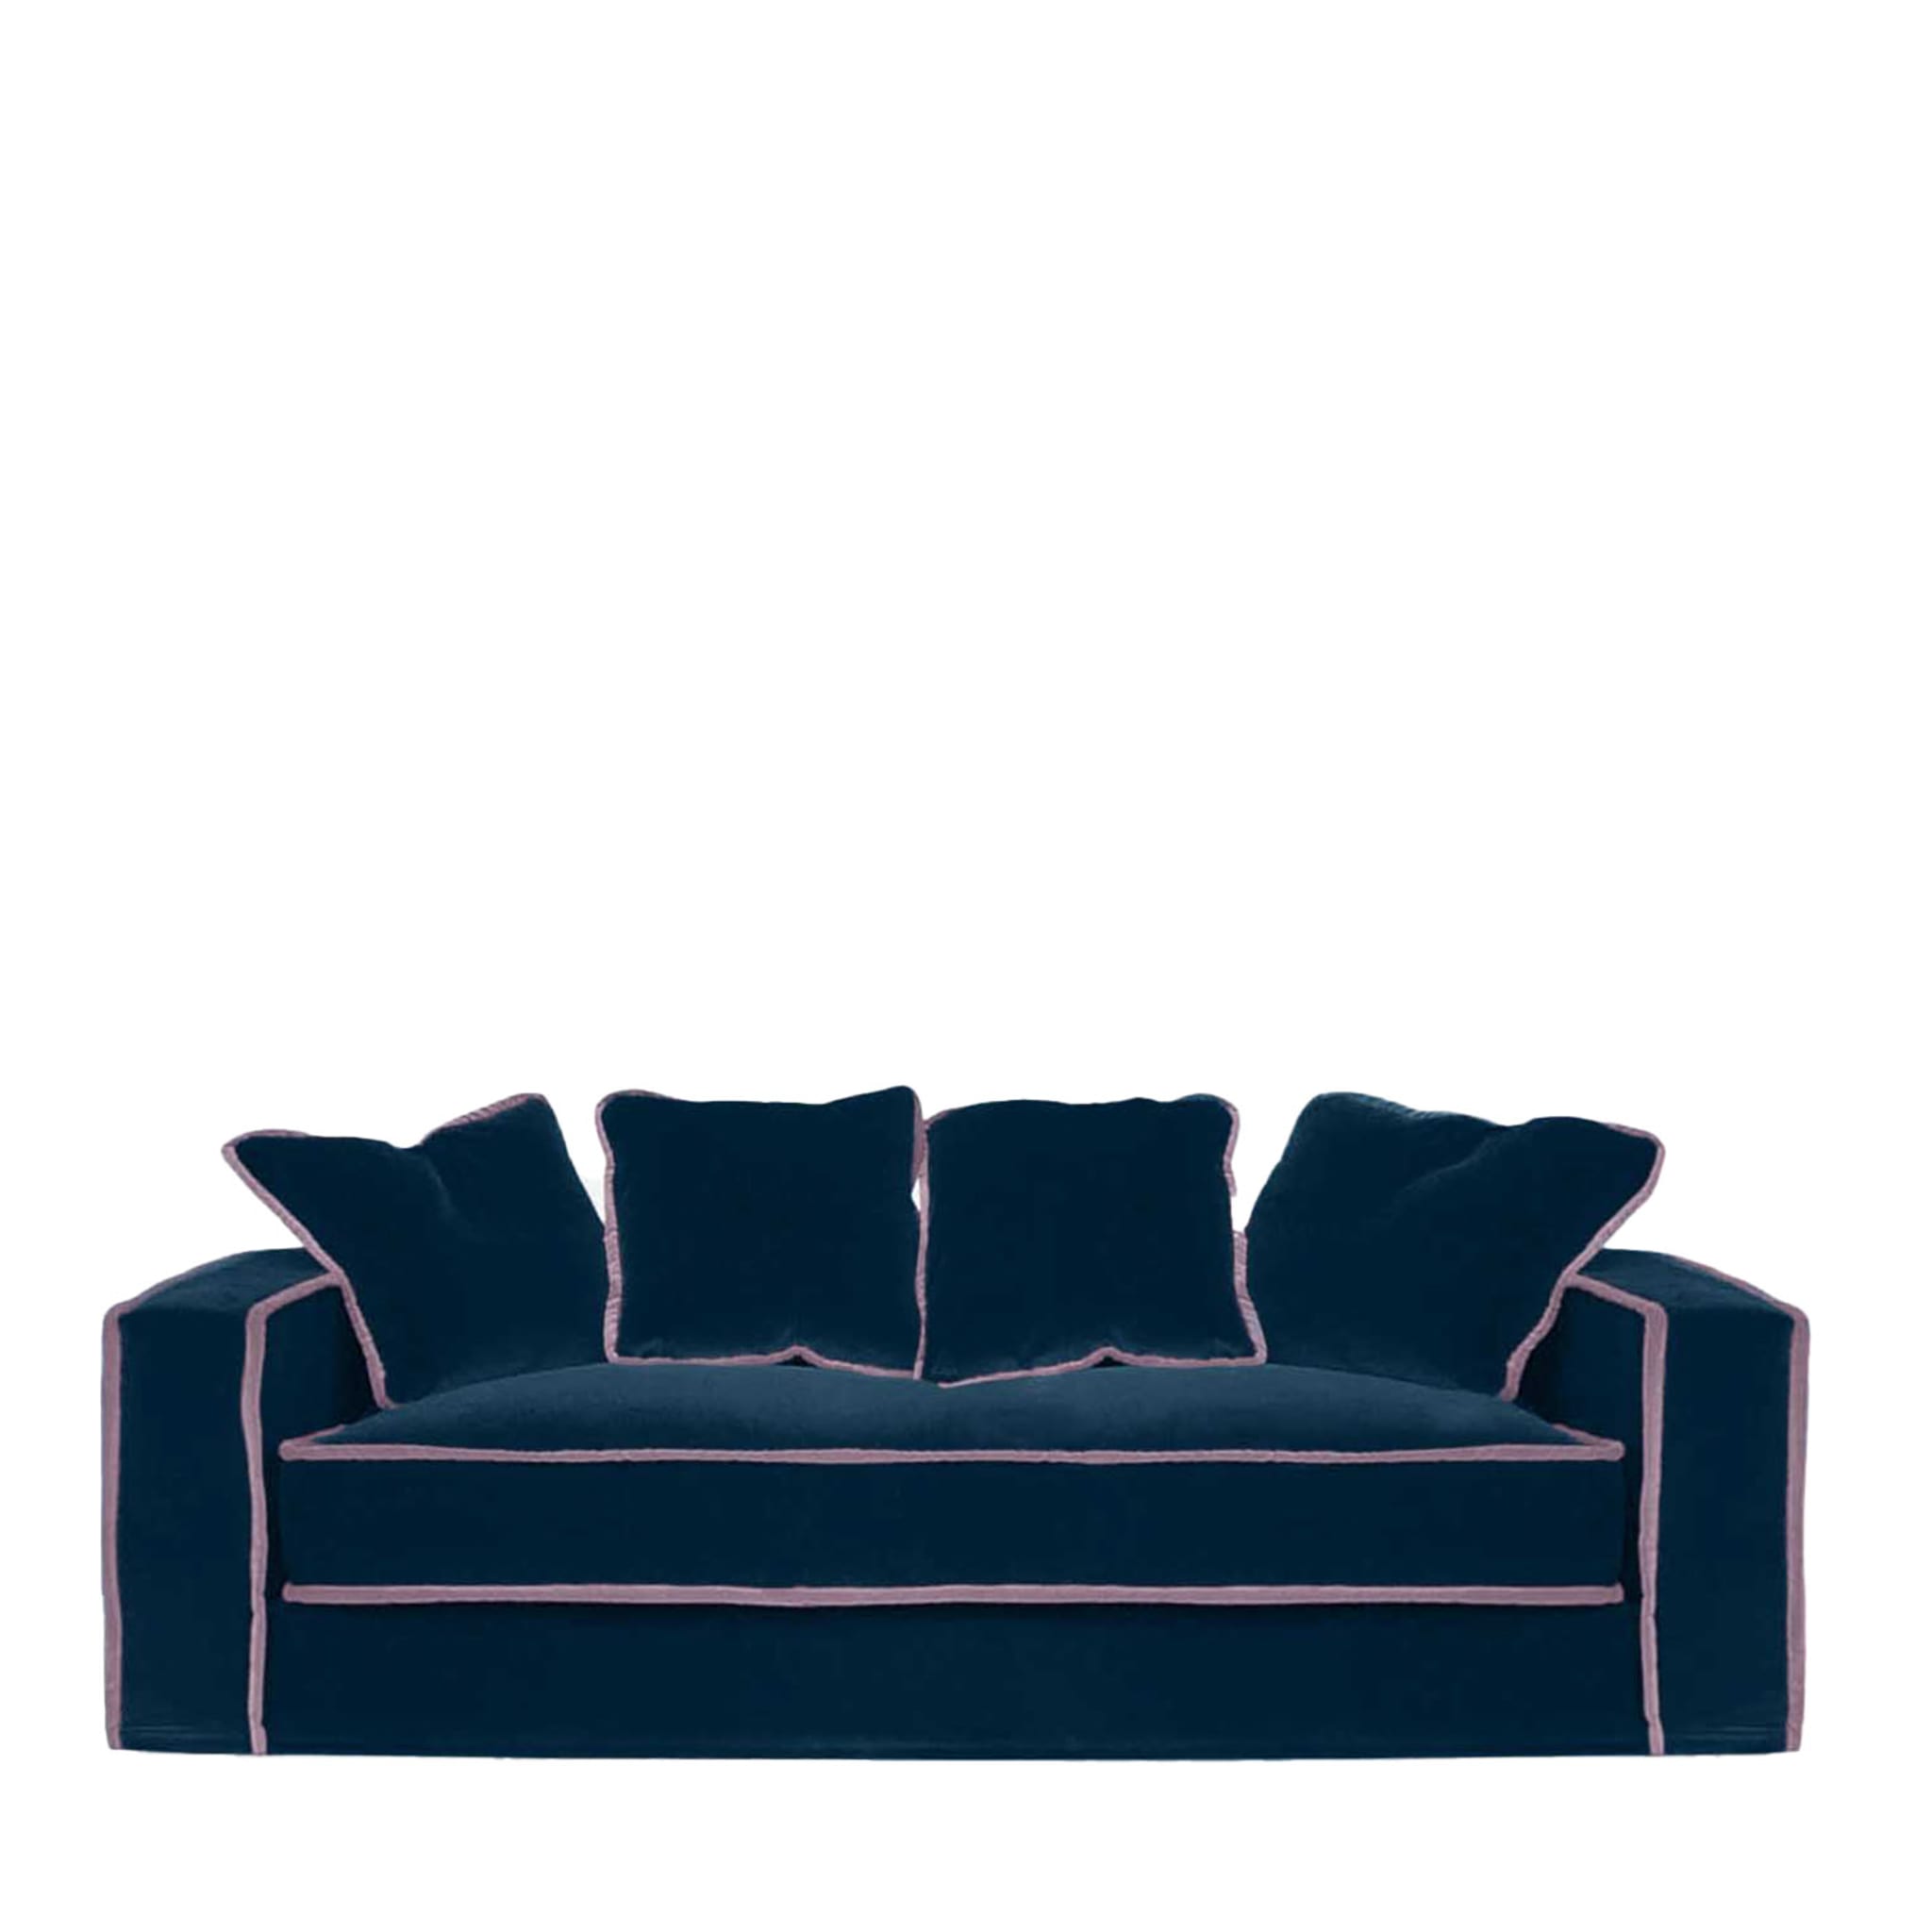 Rafaella Midnight Blue & Pink Velvet 2 Seater Sofa - Main view